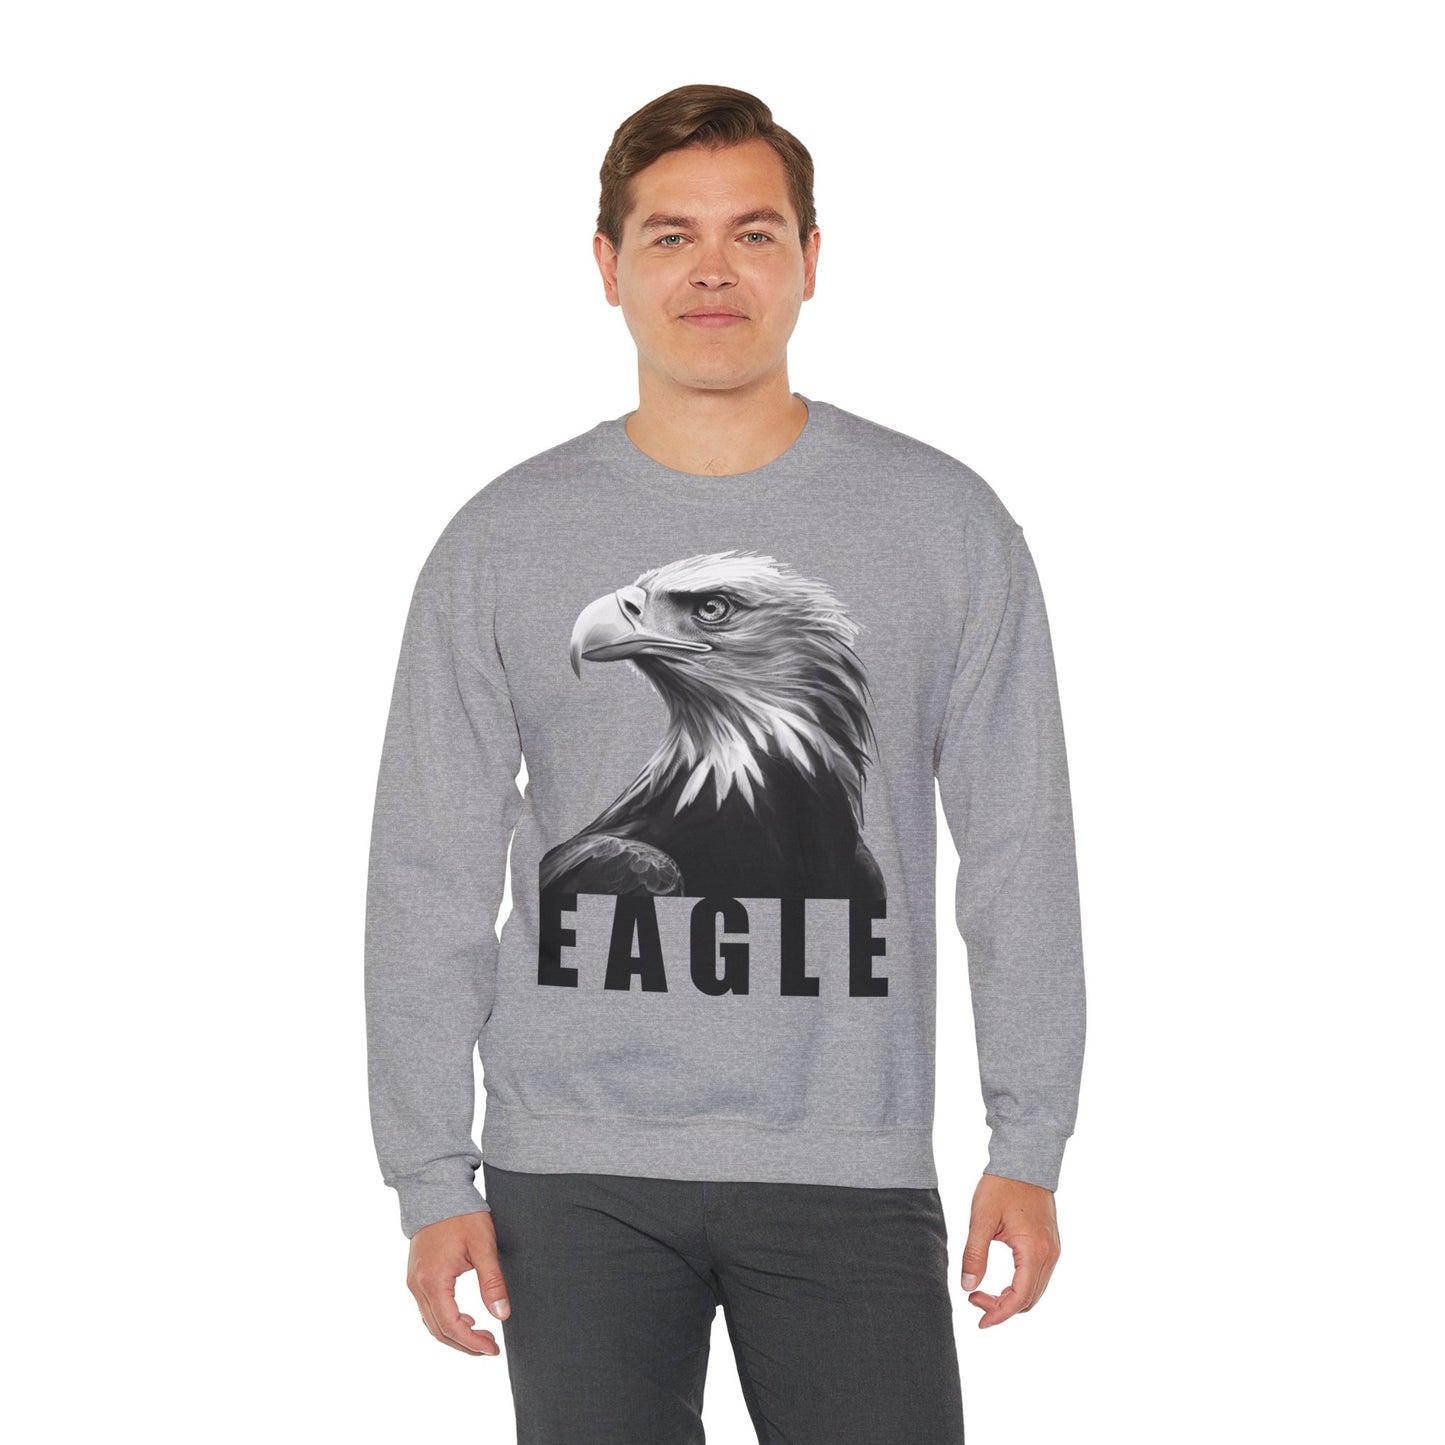 Eagle, Black&White, Women's and Men's Unisex, Crew Neck Sweatshirt